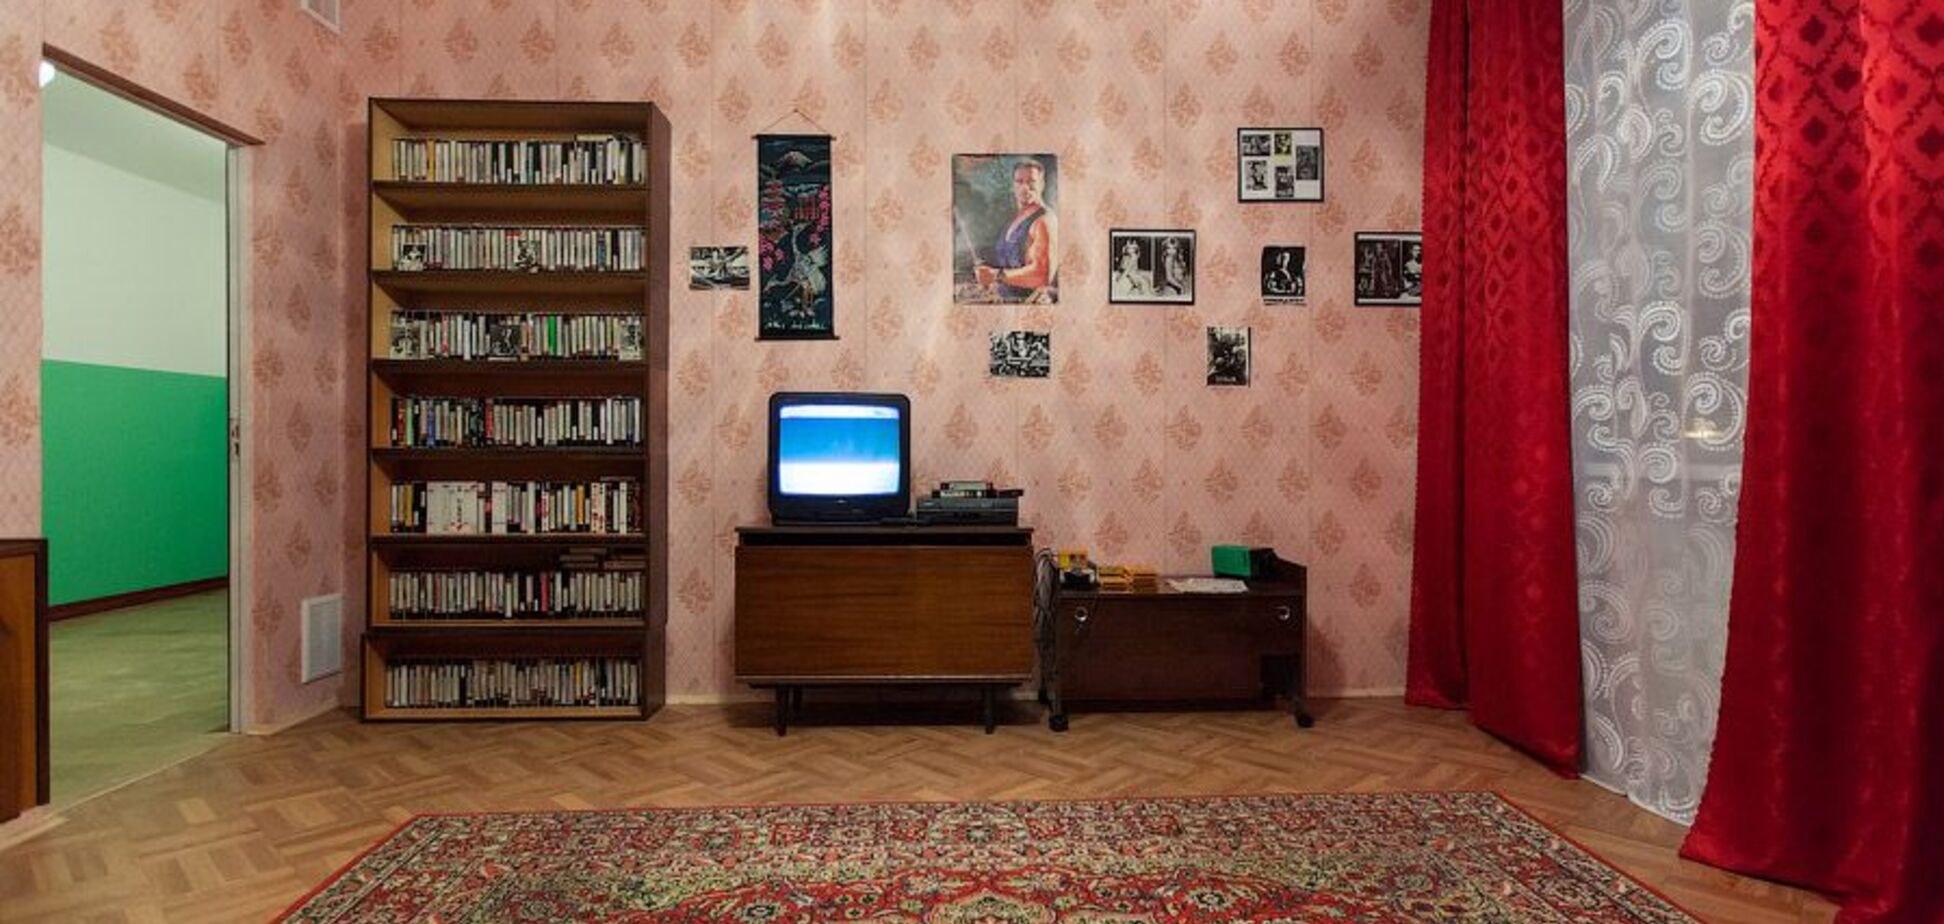 Интерьер советской квартиры 80 годов